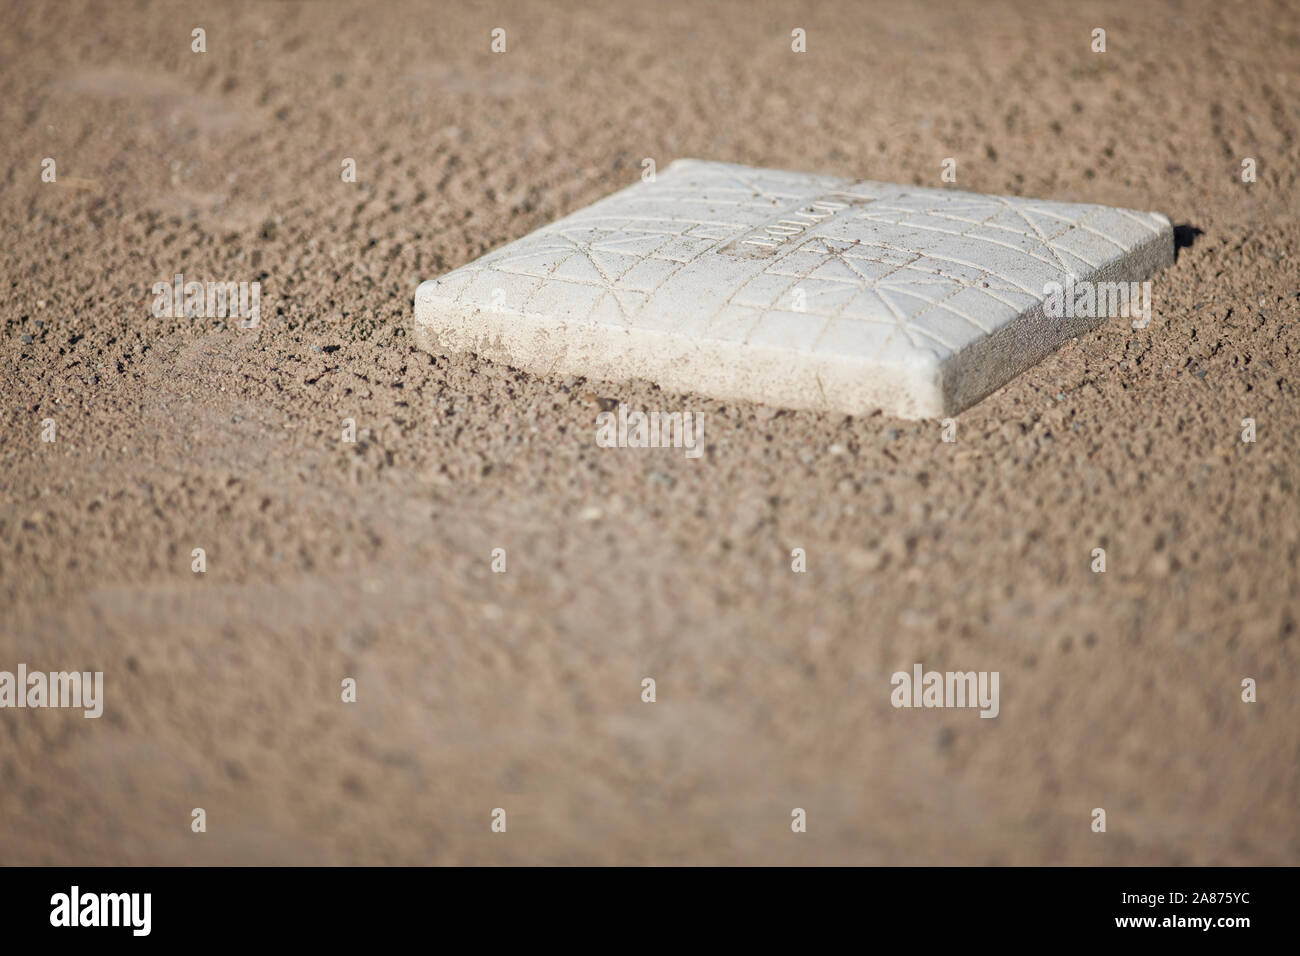 Home plate on a baseball field. Stock Photo